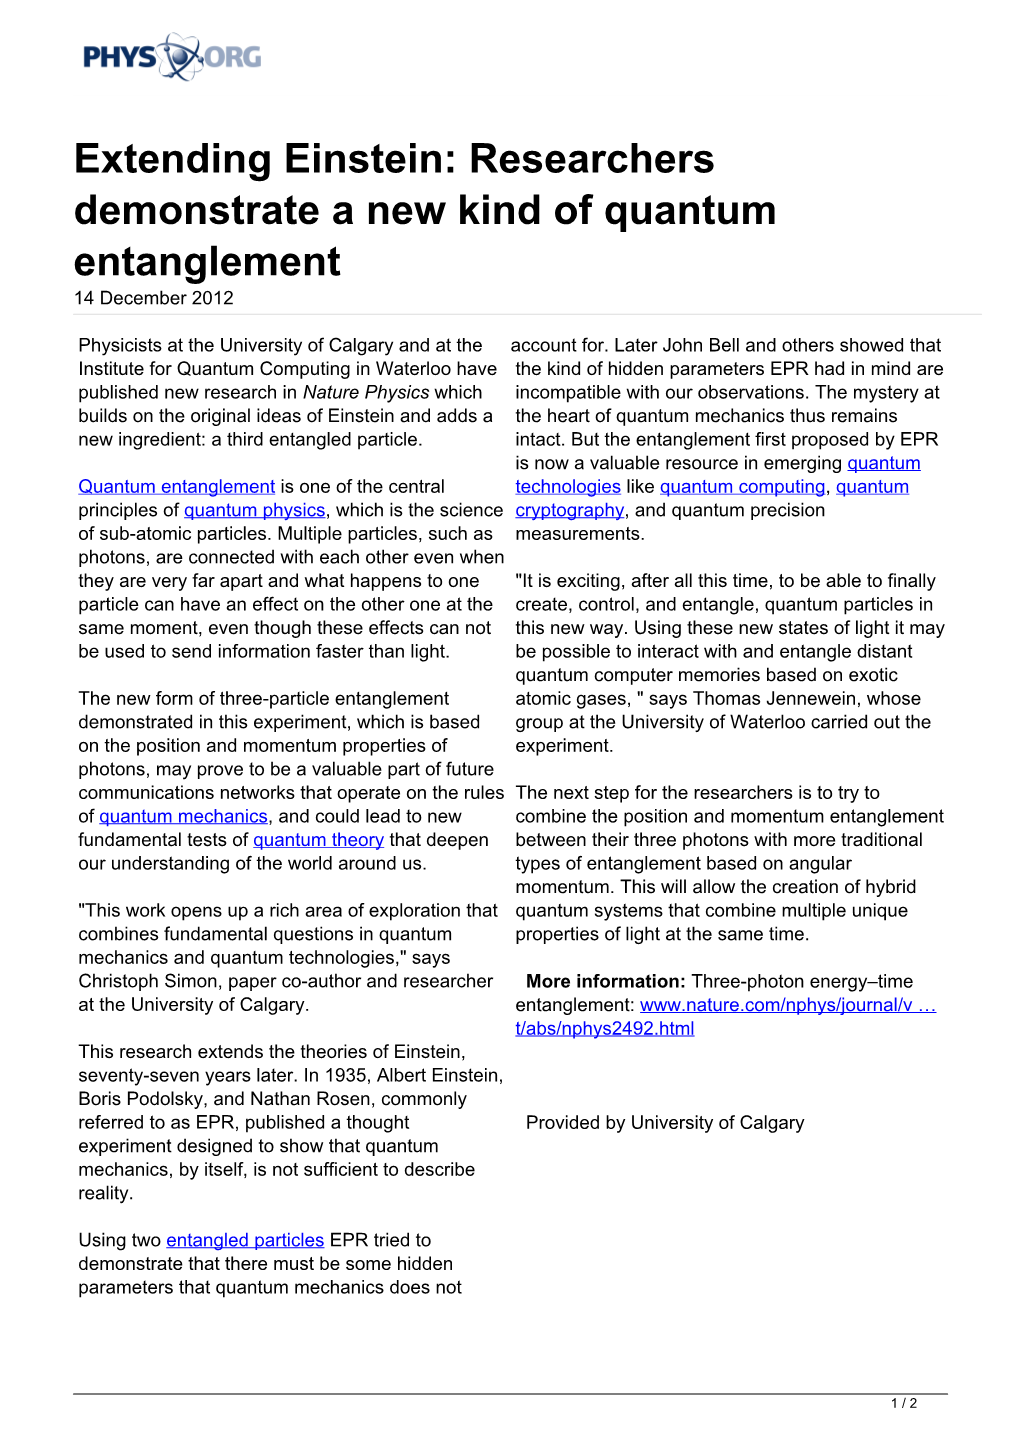 Extending Einstein: Researchers Demonstrate a New Kind of Quantum Entanglement 14 December 2012